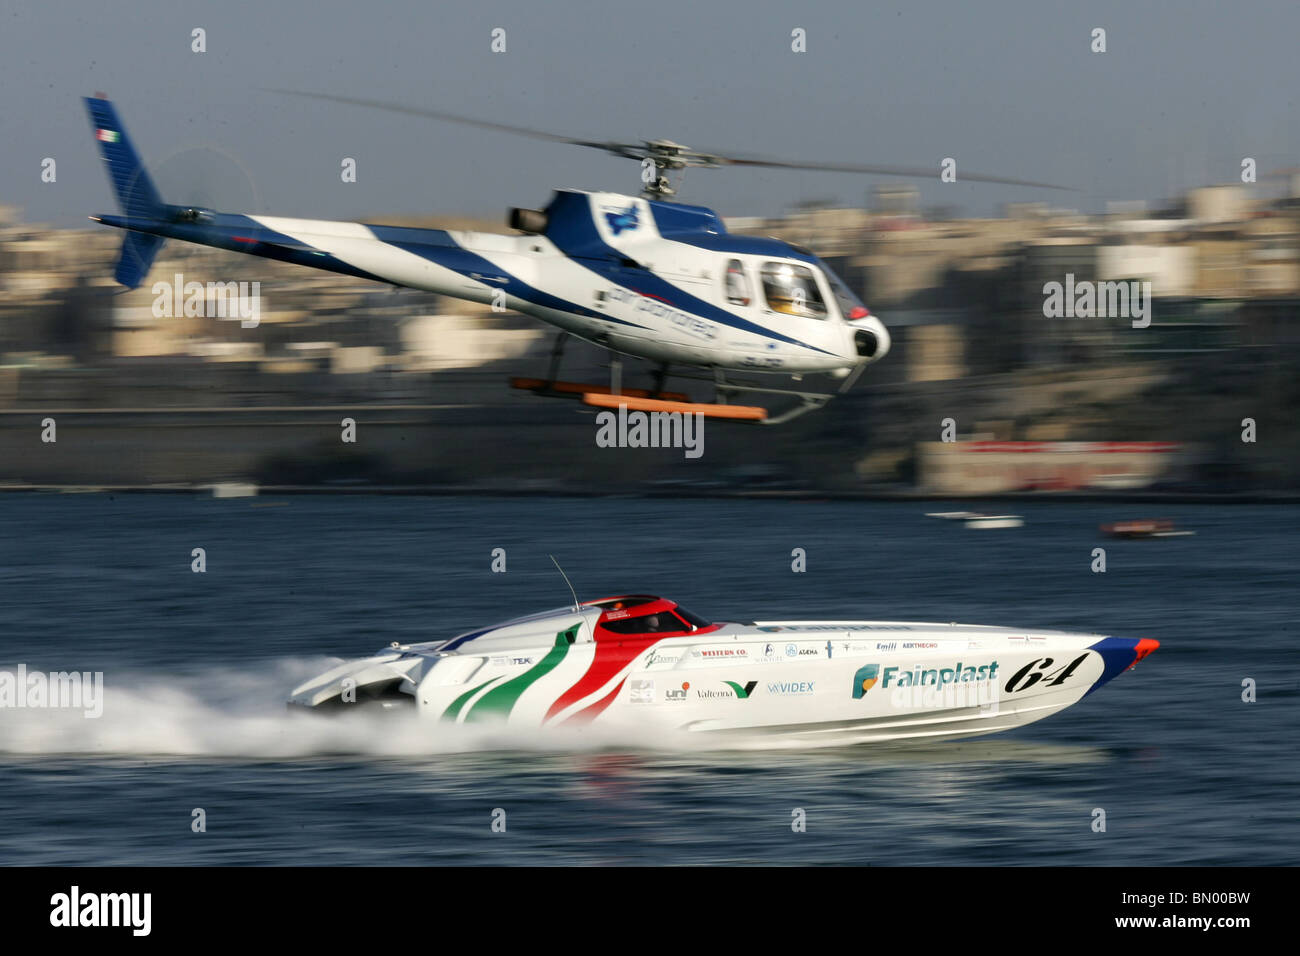 #64, Fainplast, Italienisch. Evolution-Klasse. Stefano Cola, Stefano Bonanno, Marco Pennesi, Powerboat P1 WM. Maltesisch Stockfoto